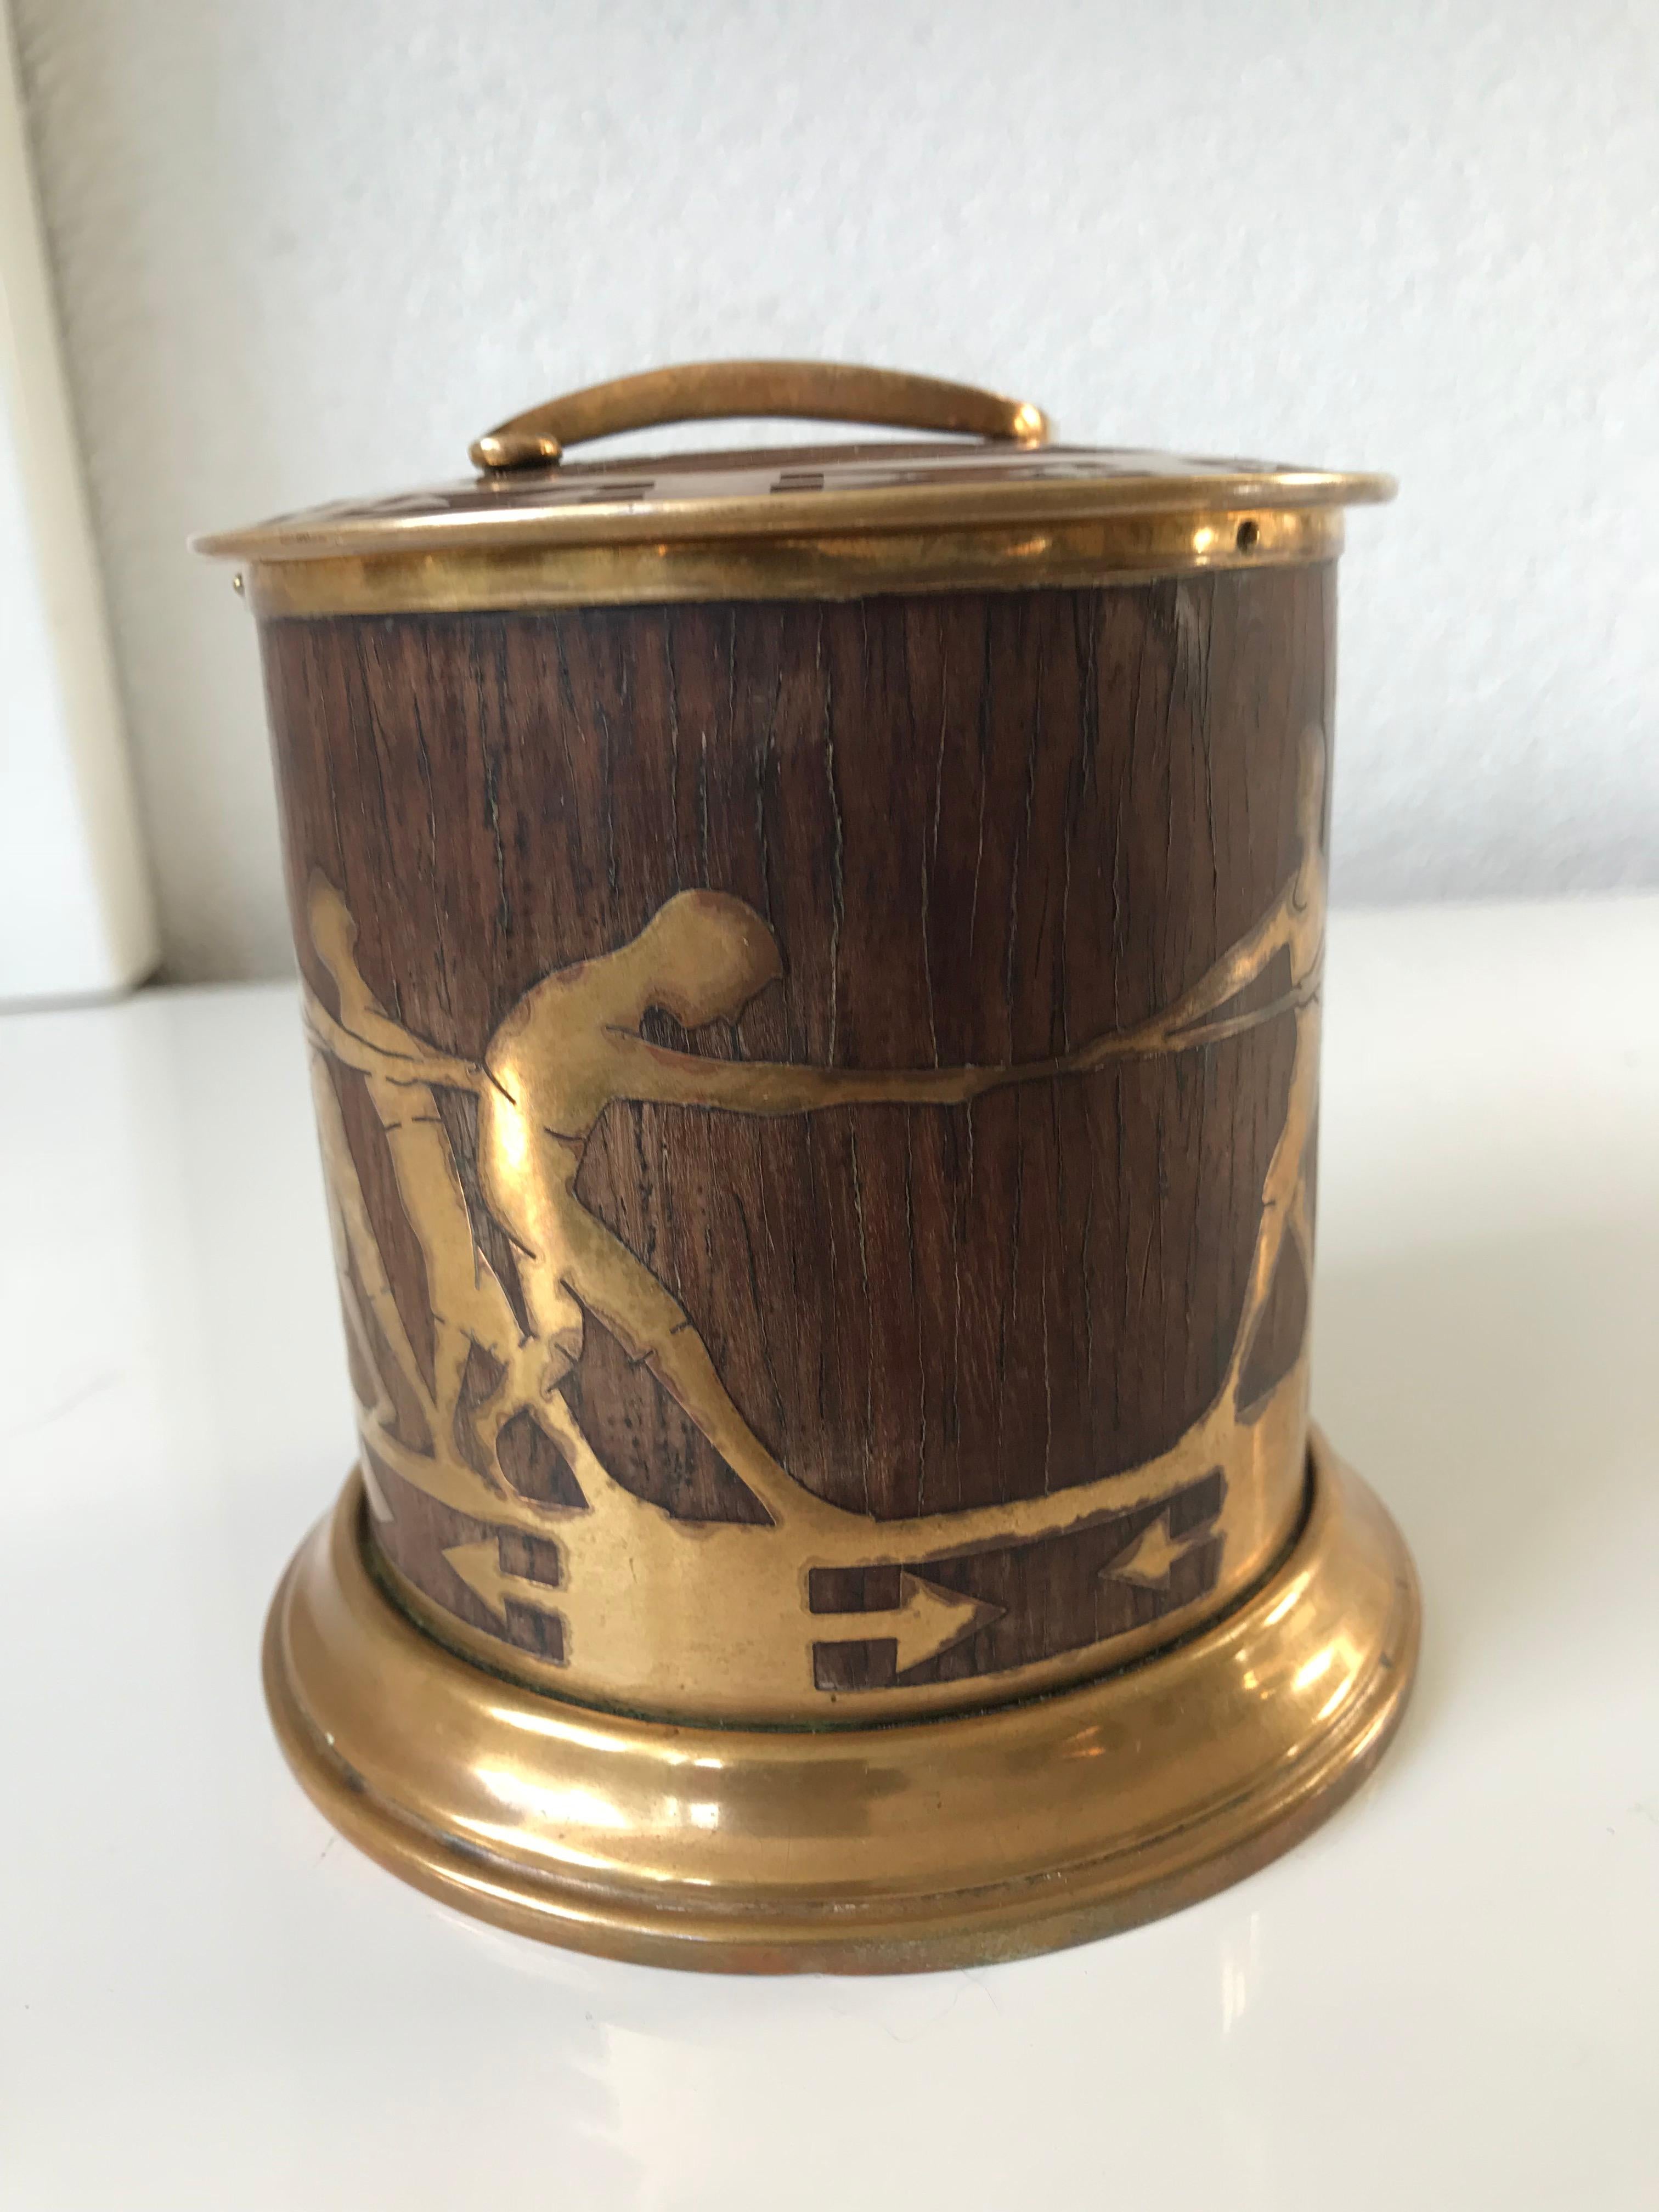 Austrian Arts & Crafts Brass and Wood Round Box by Erhard & Sohne, Vienna Secessionist